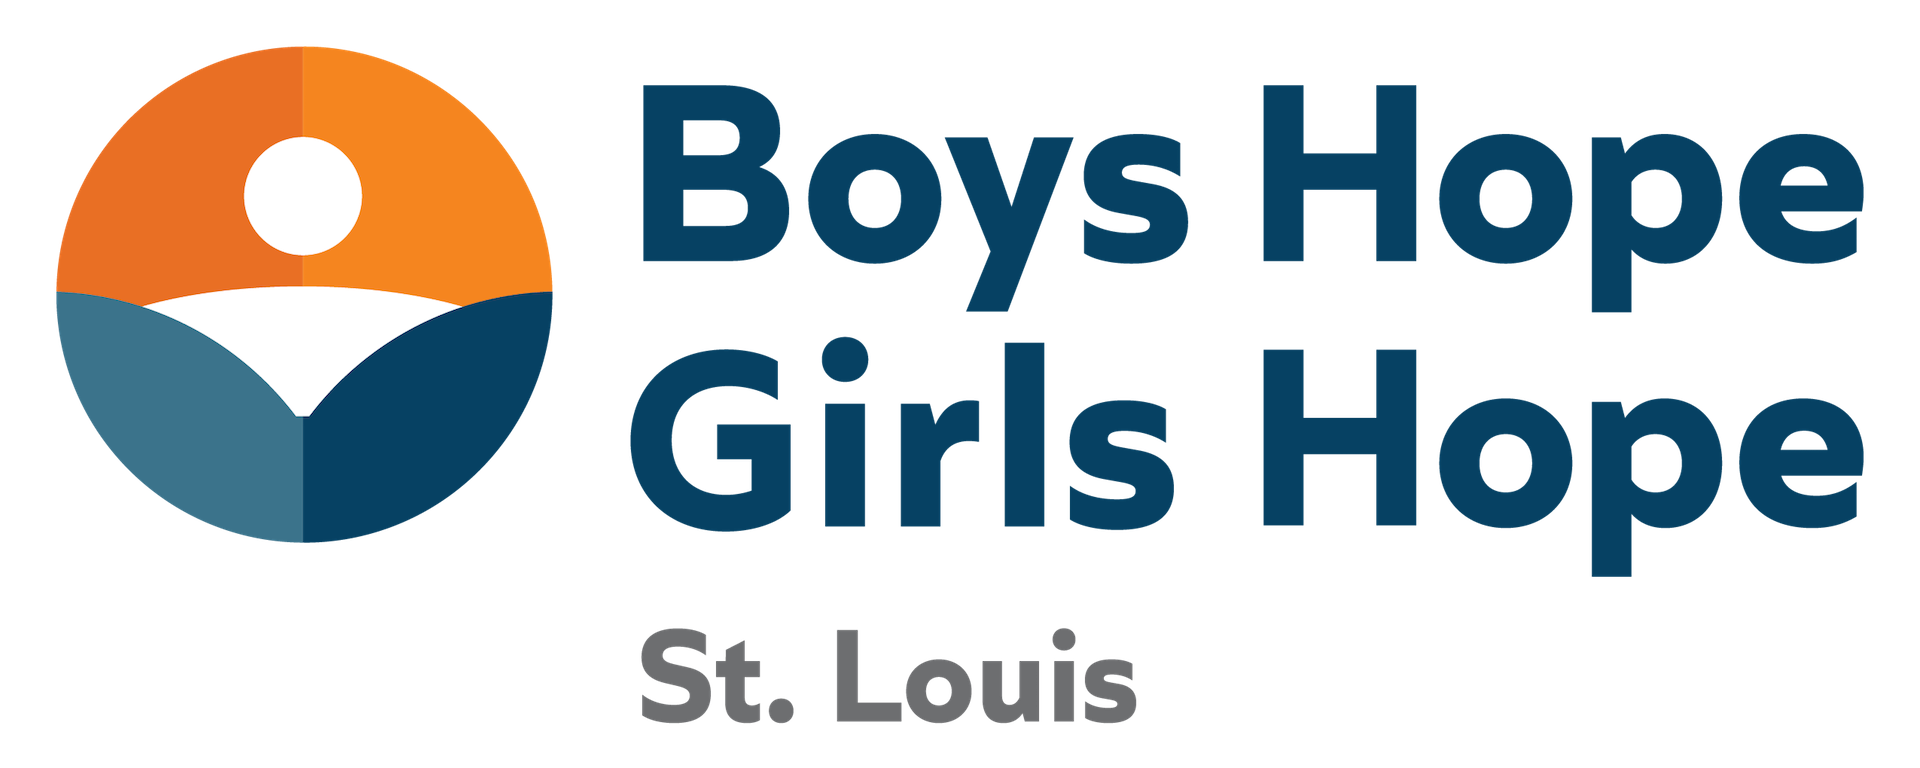 Make A Difference for Boys Hope Girls Hope on November 23!